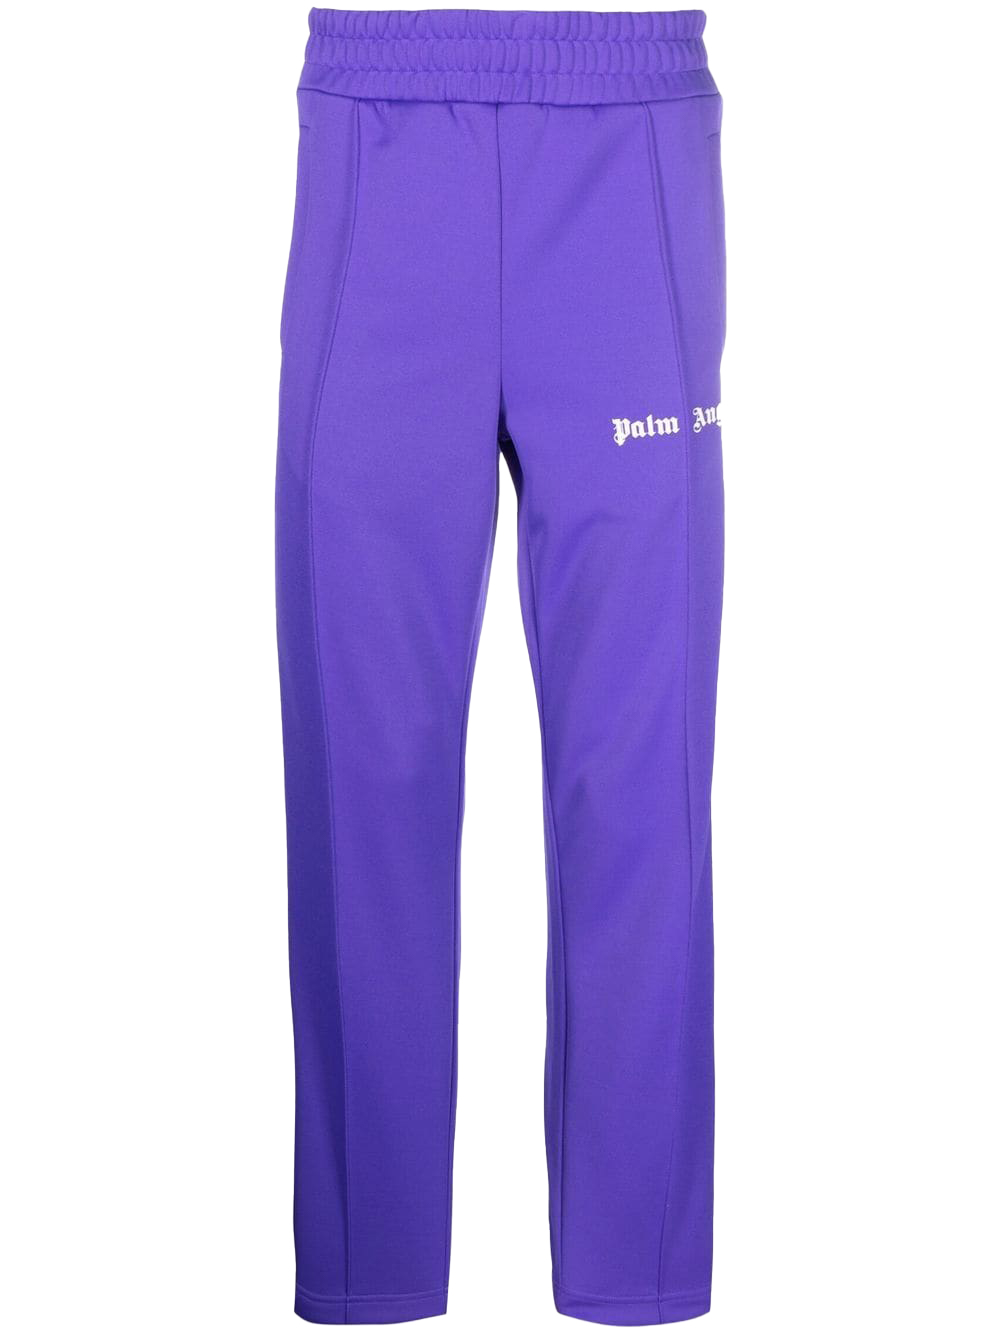 Palm Angels Track Pants Purple/White